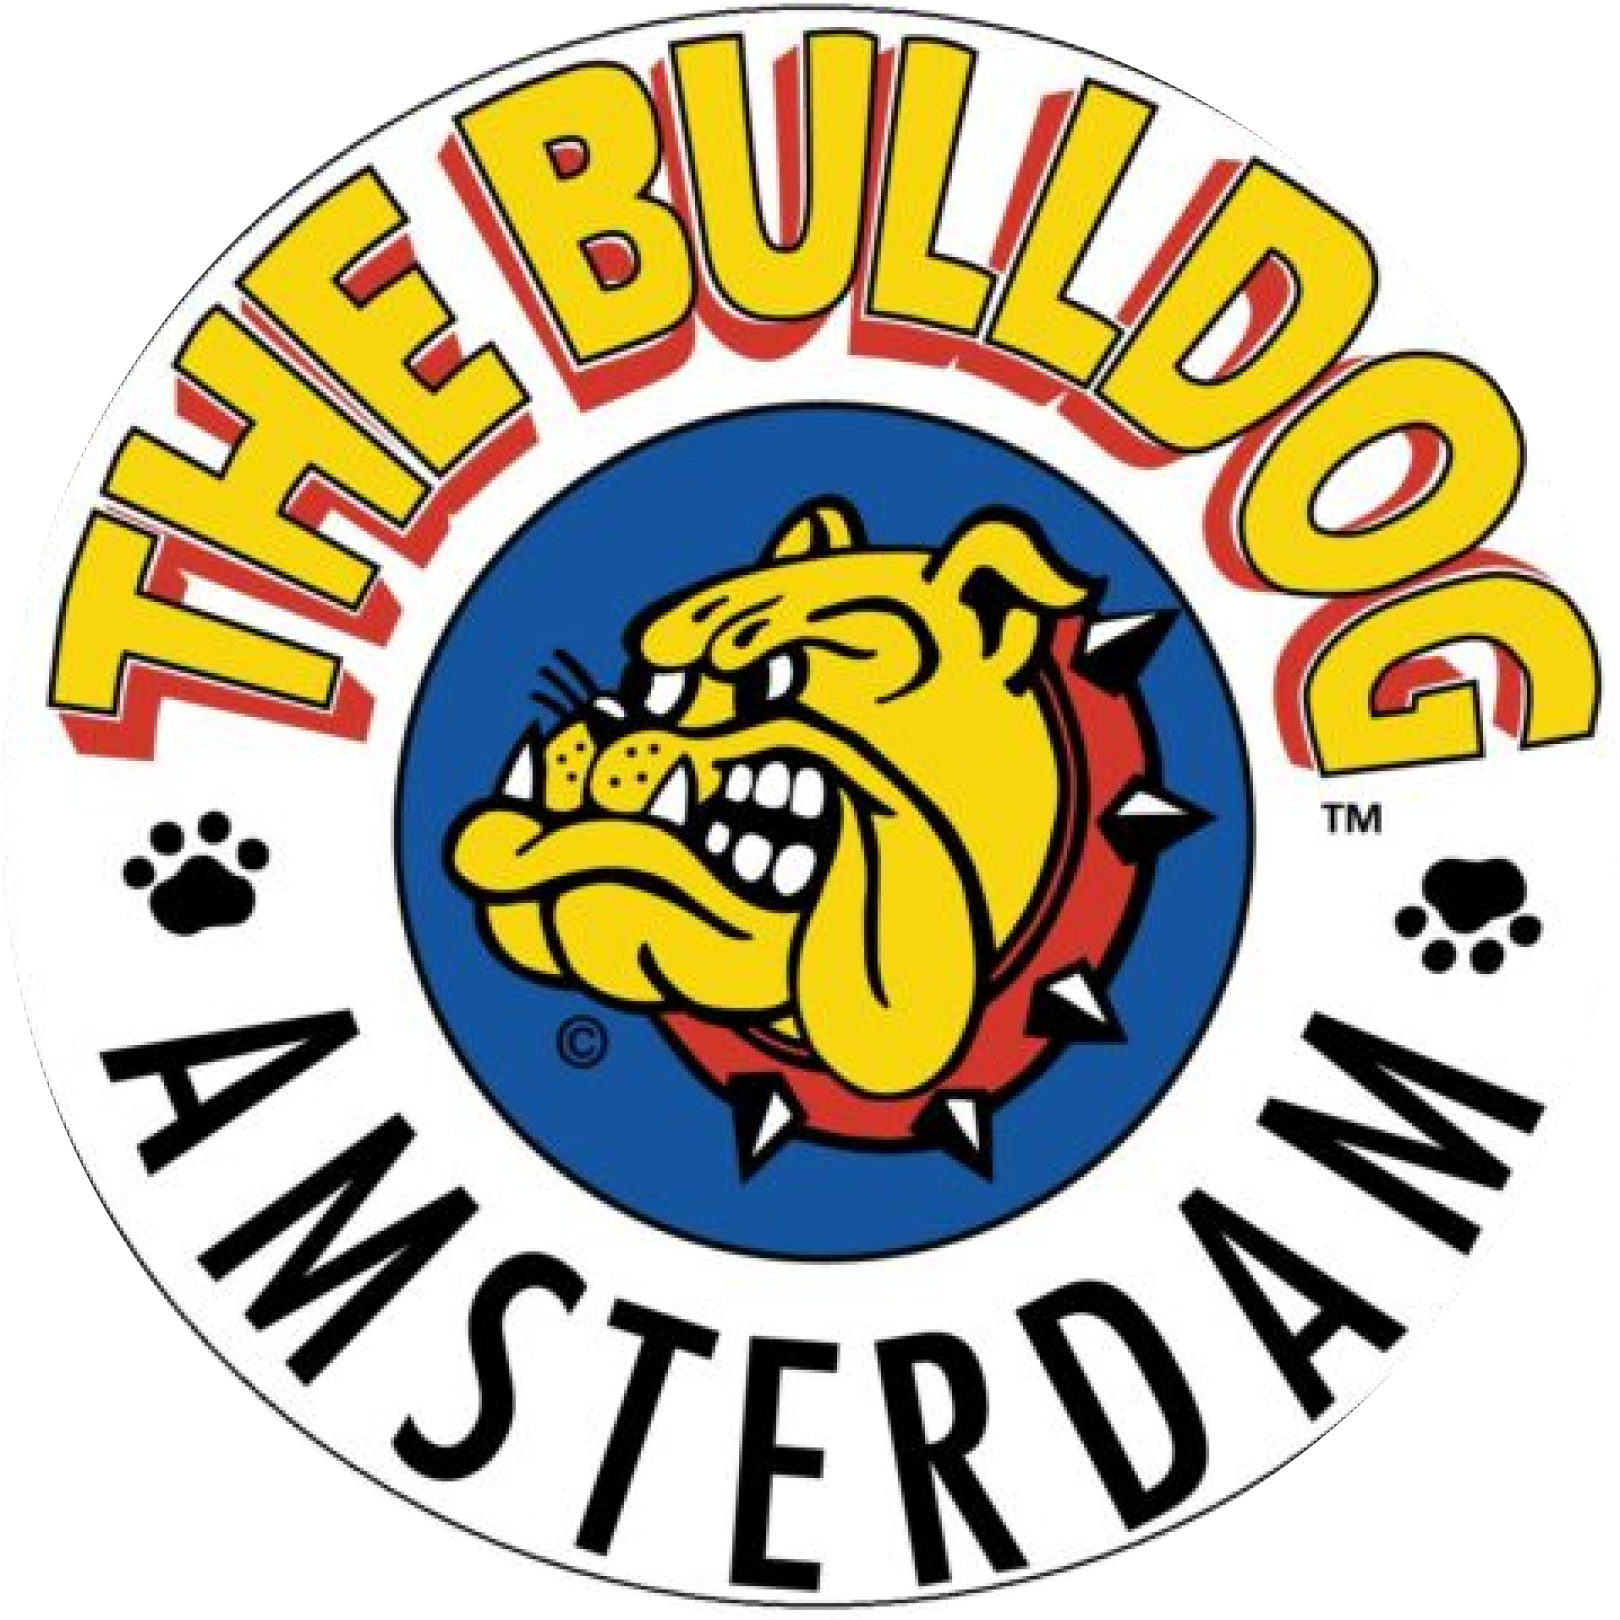 The Bulldog CBD coffee products logo